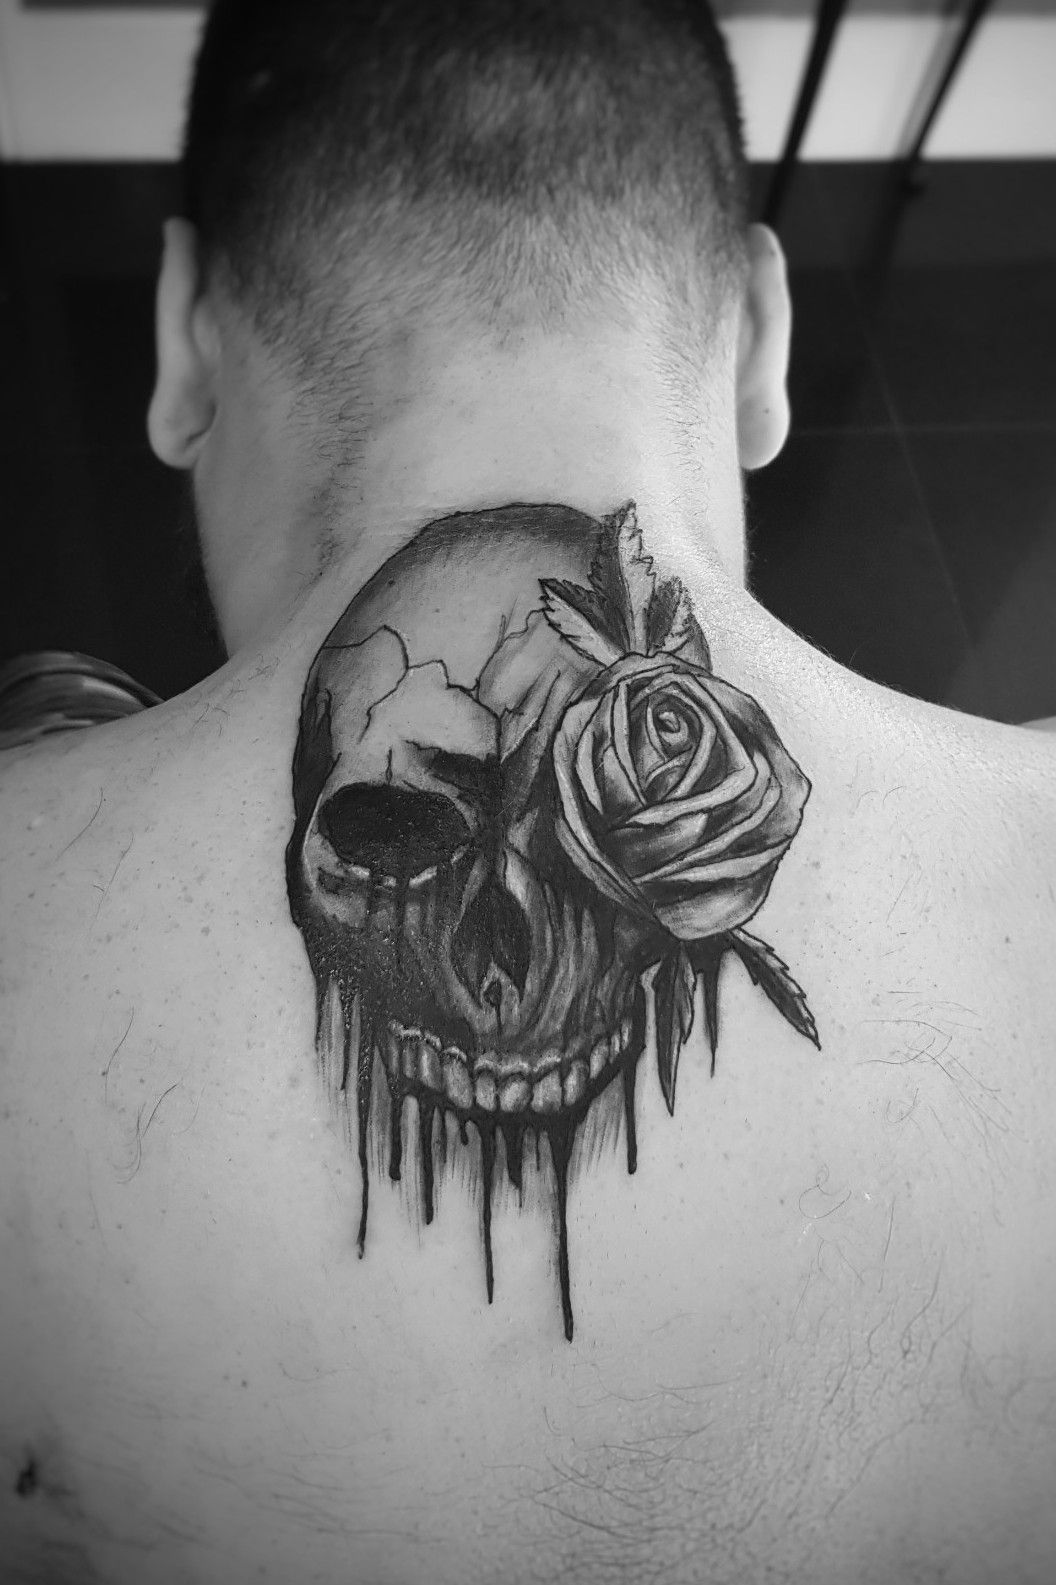 Tattoo uploaded by 𝖆𝖑𝖈𝖍𝖎𝖓𝖊𝖘𝖘𝖊  Melted skull Blackwork  Tattoodo